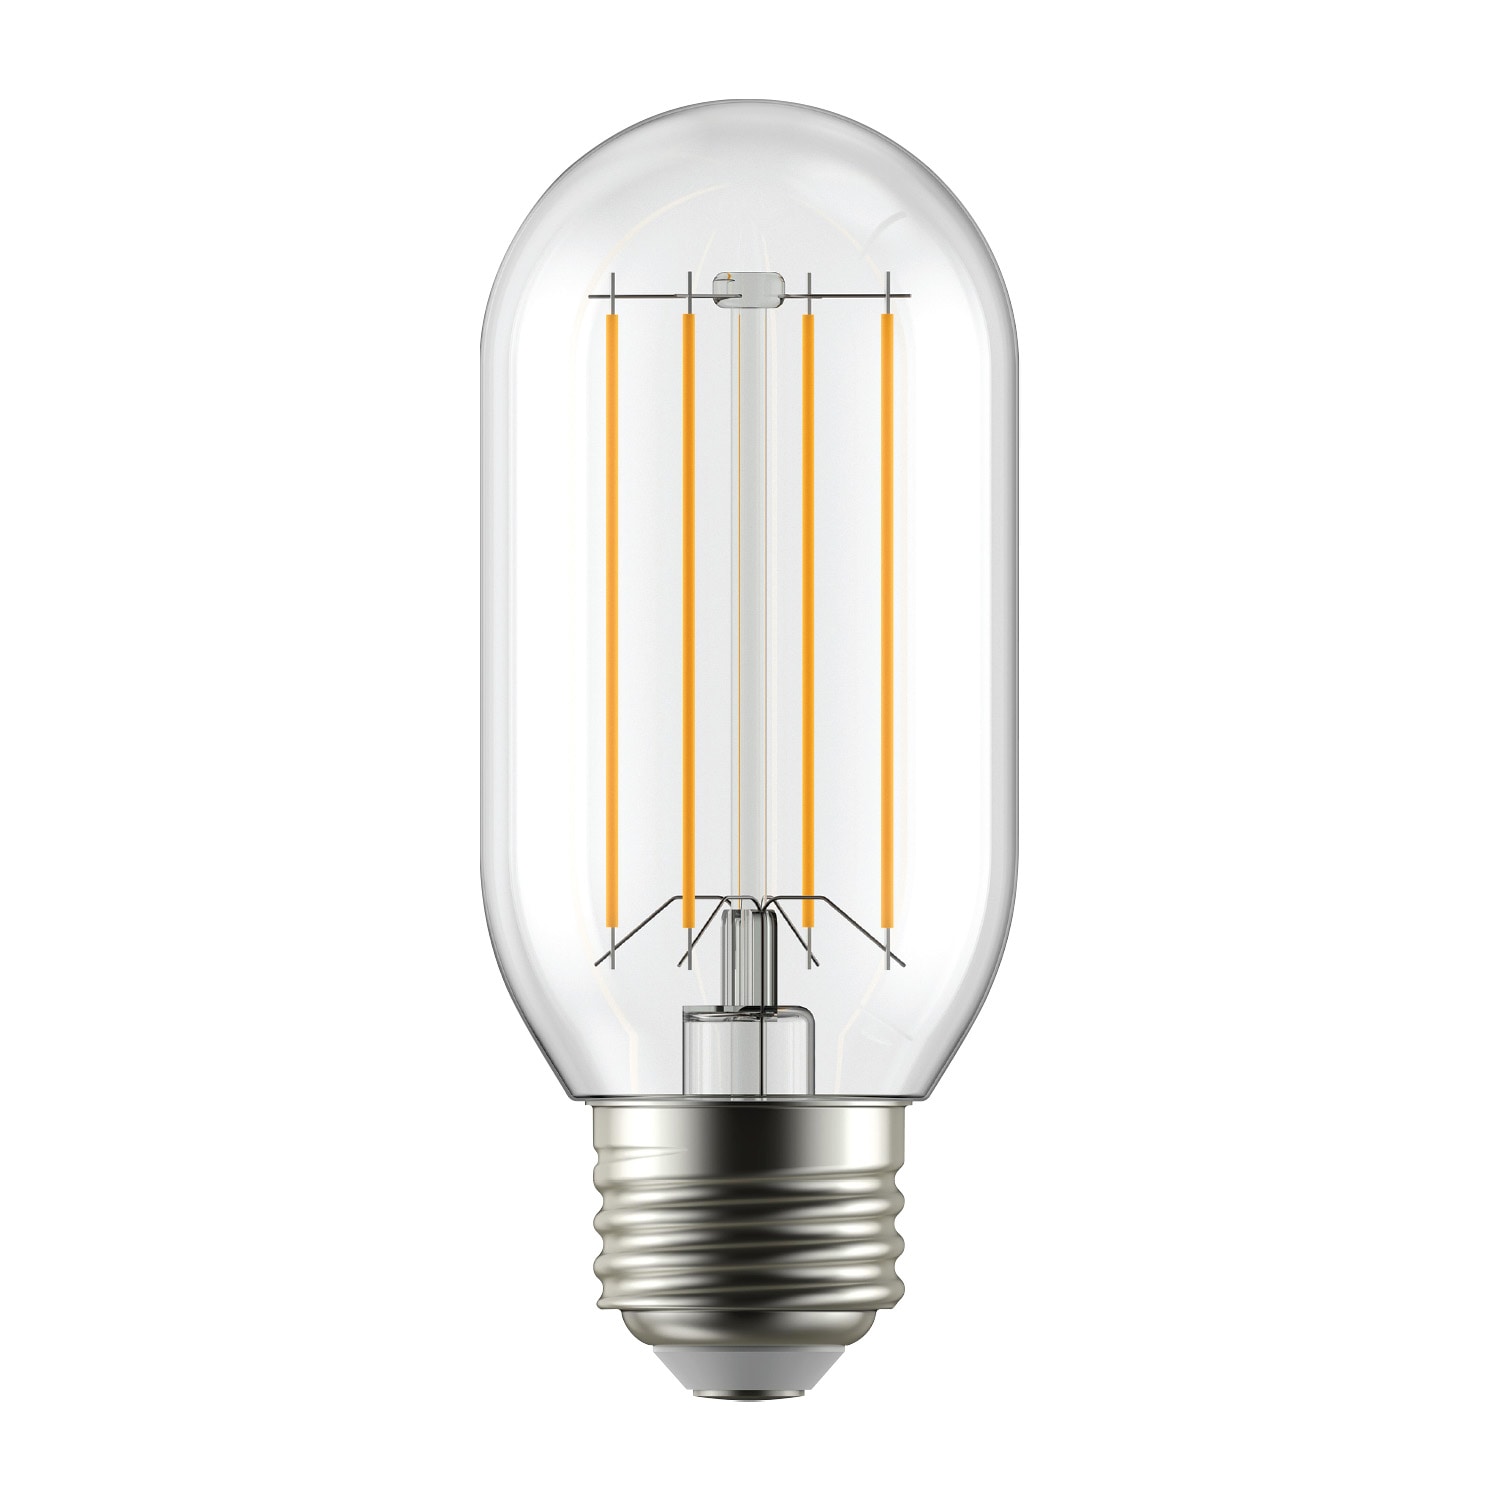 Ge Reveal Hd+ Light Bulb Appliance Bulb 40w Clear Finish Medium Base :  Target